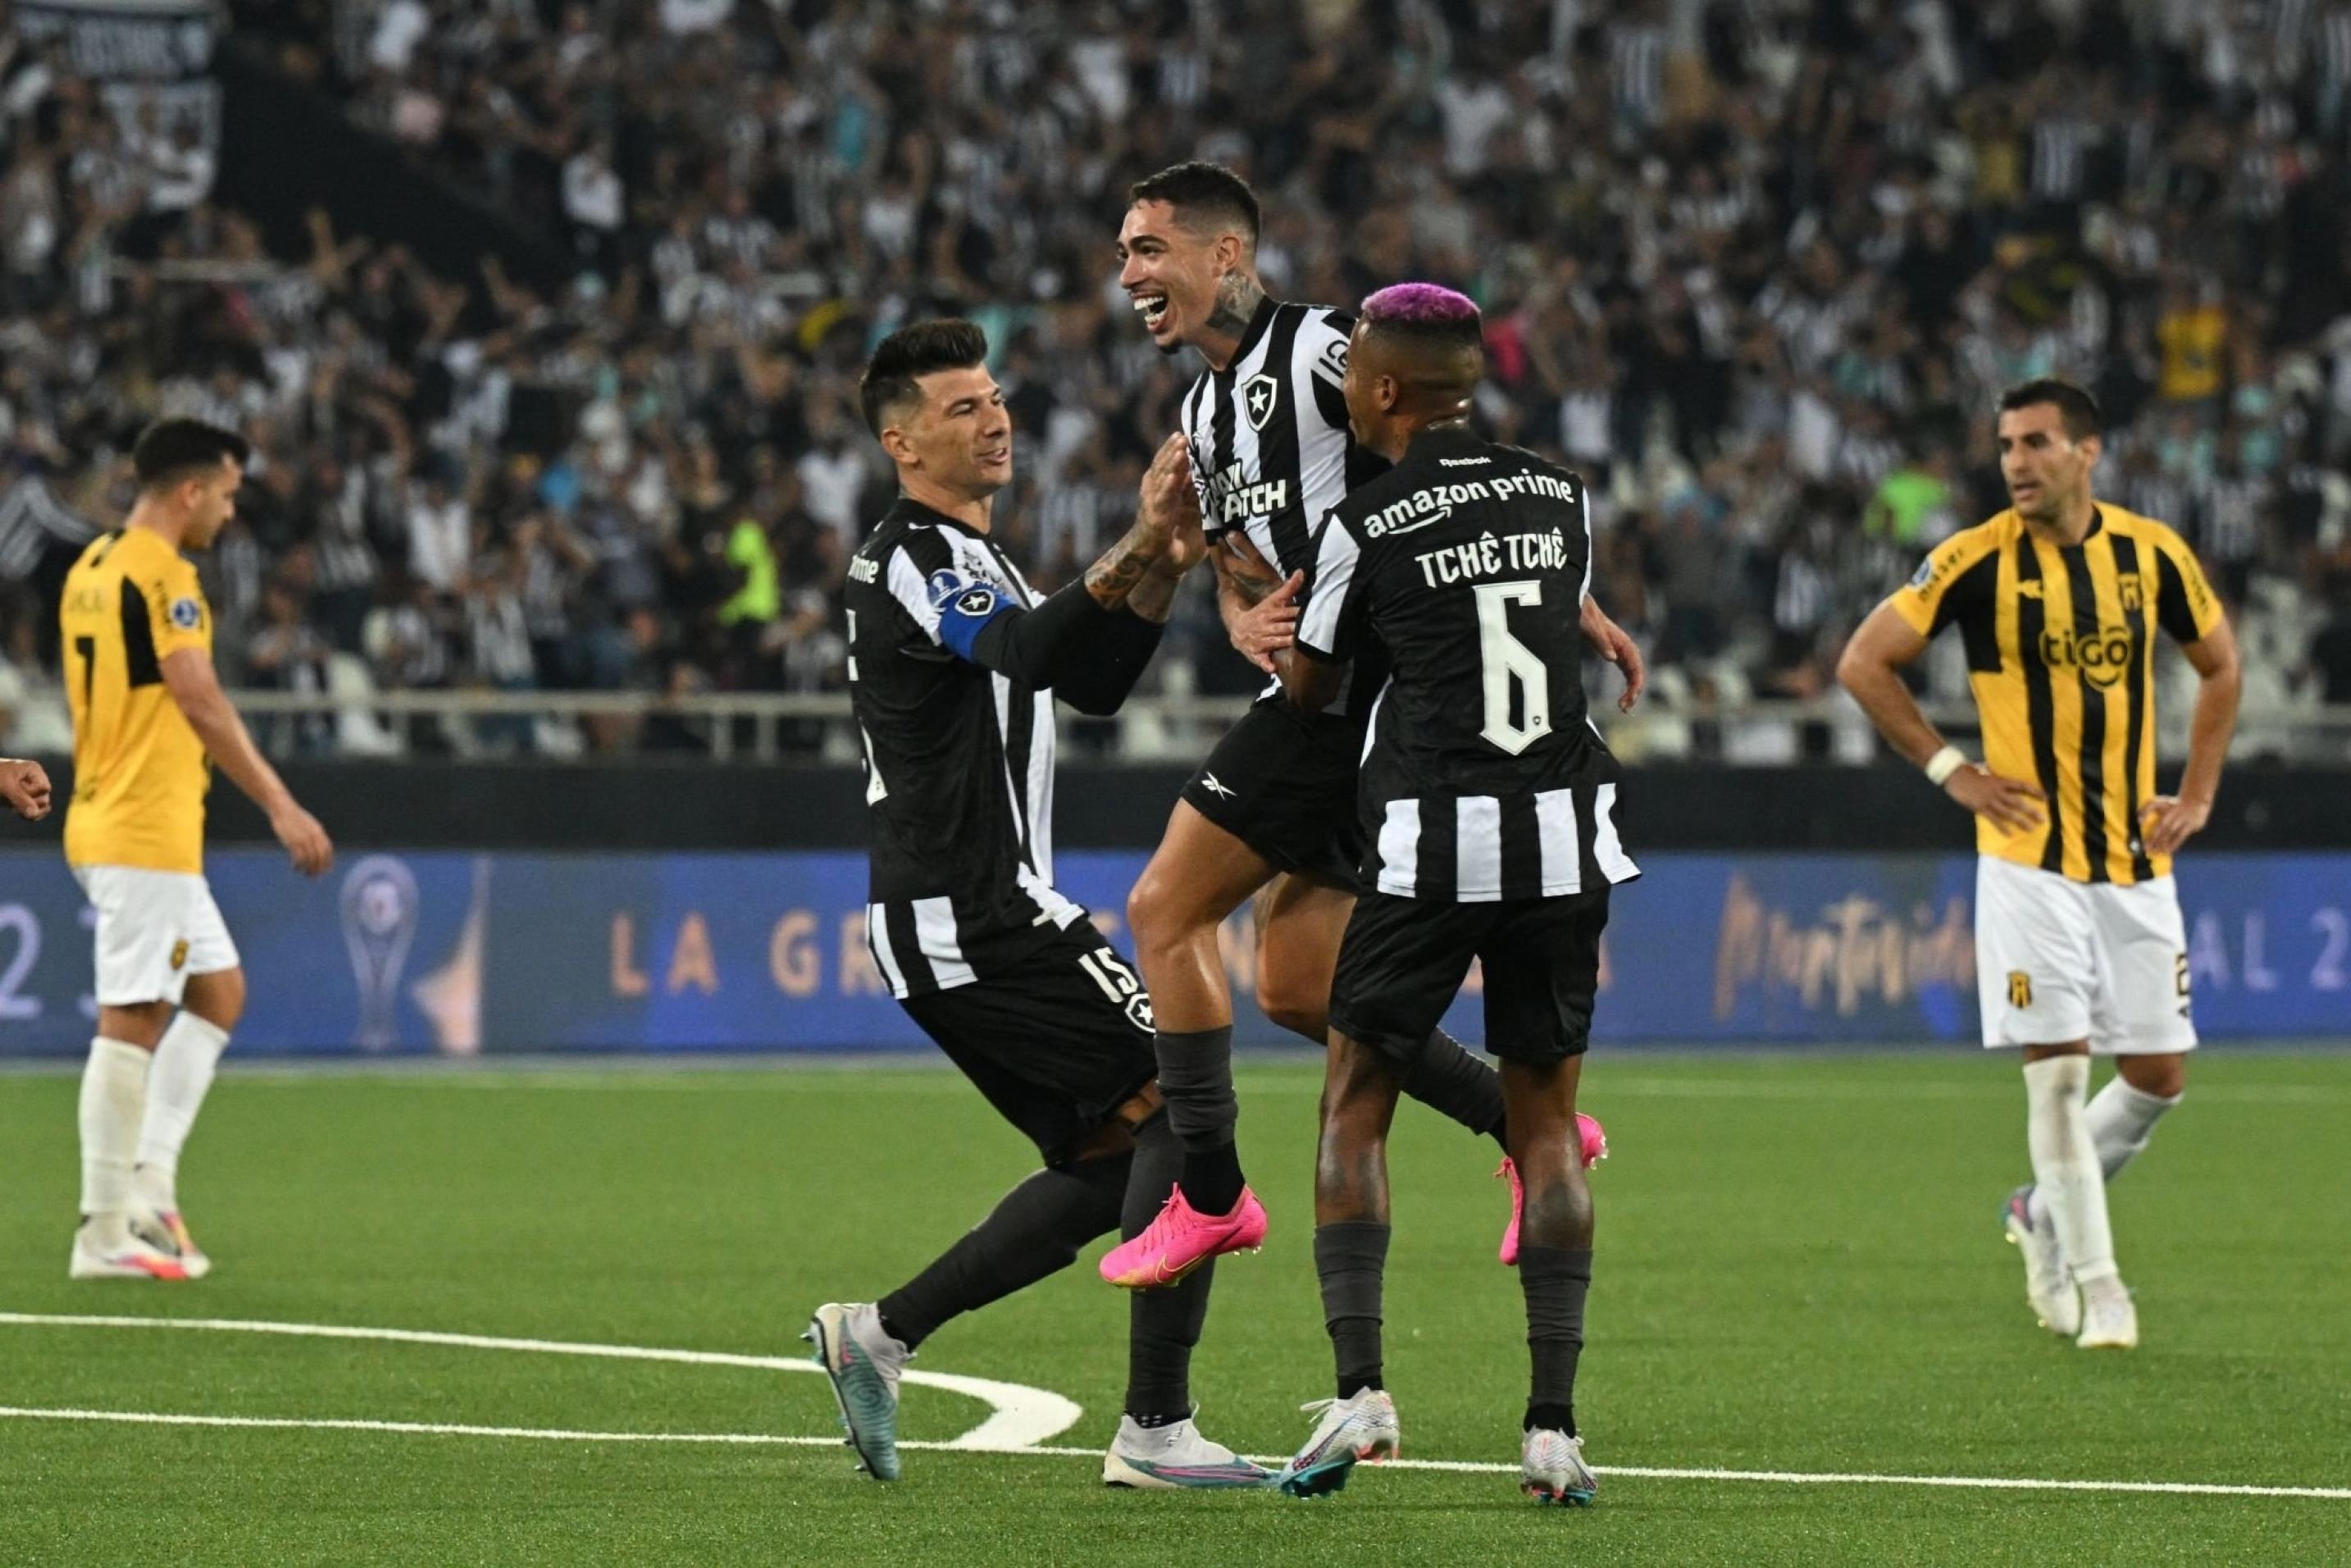 HL Copa Sudamericana - Botafogo vs Guarani